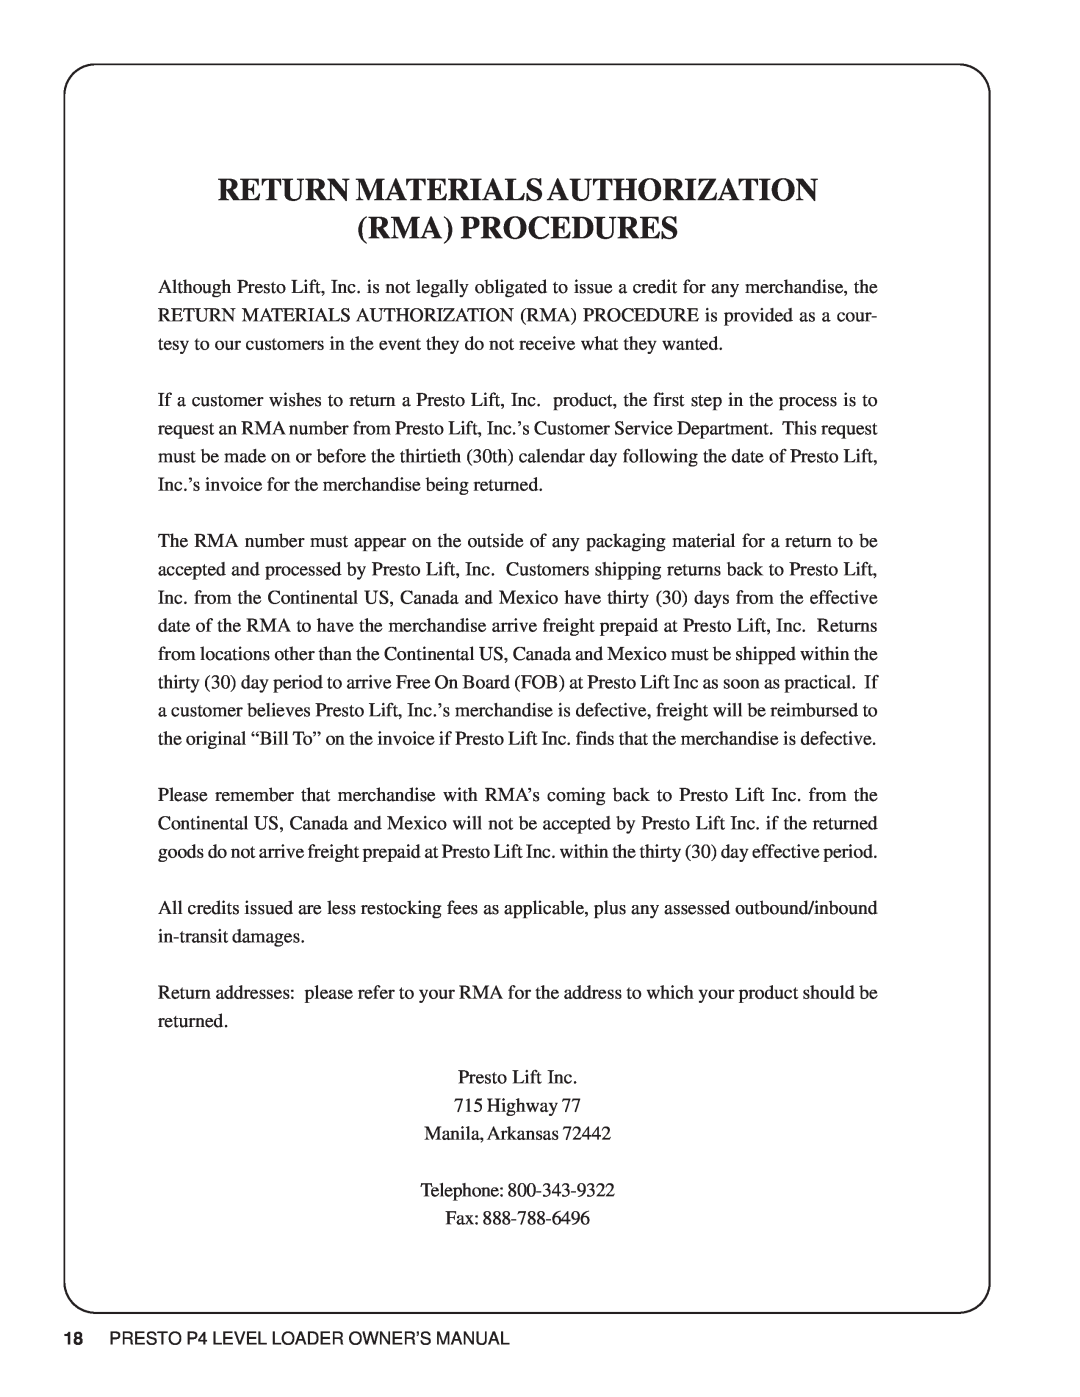 Presto P4 manual Return Materialsauthorization Rma Procedures 